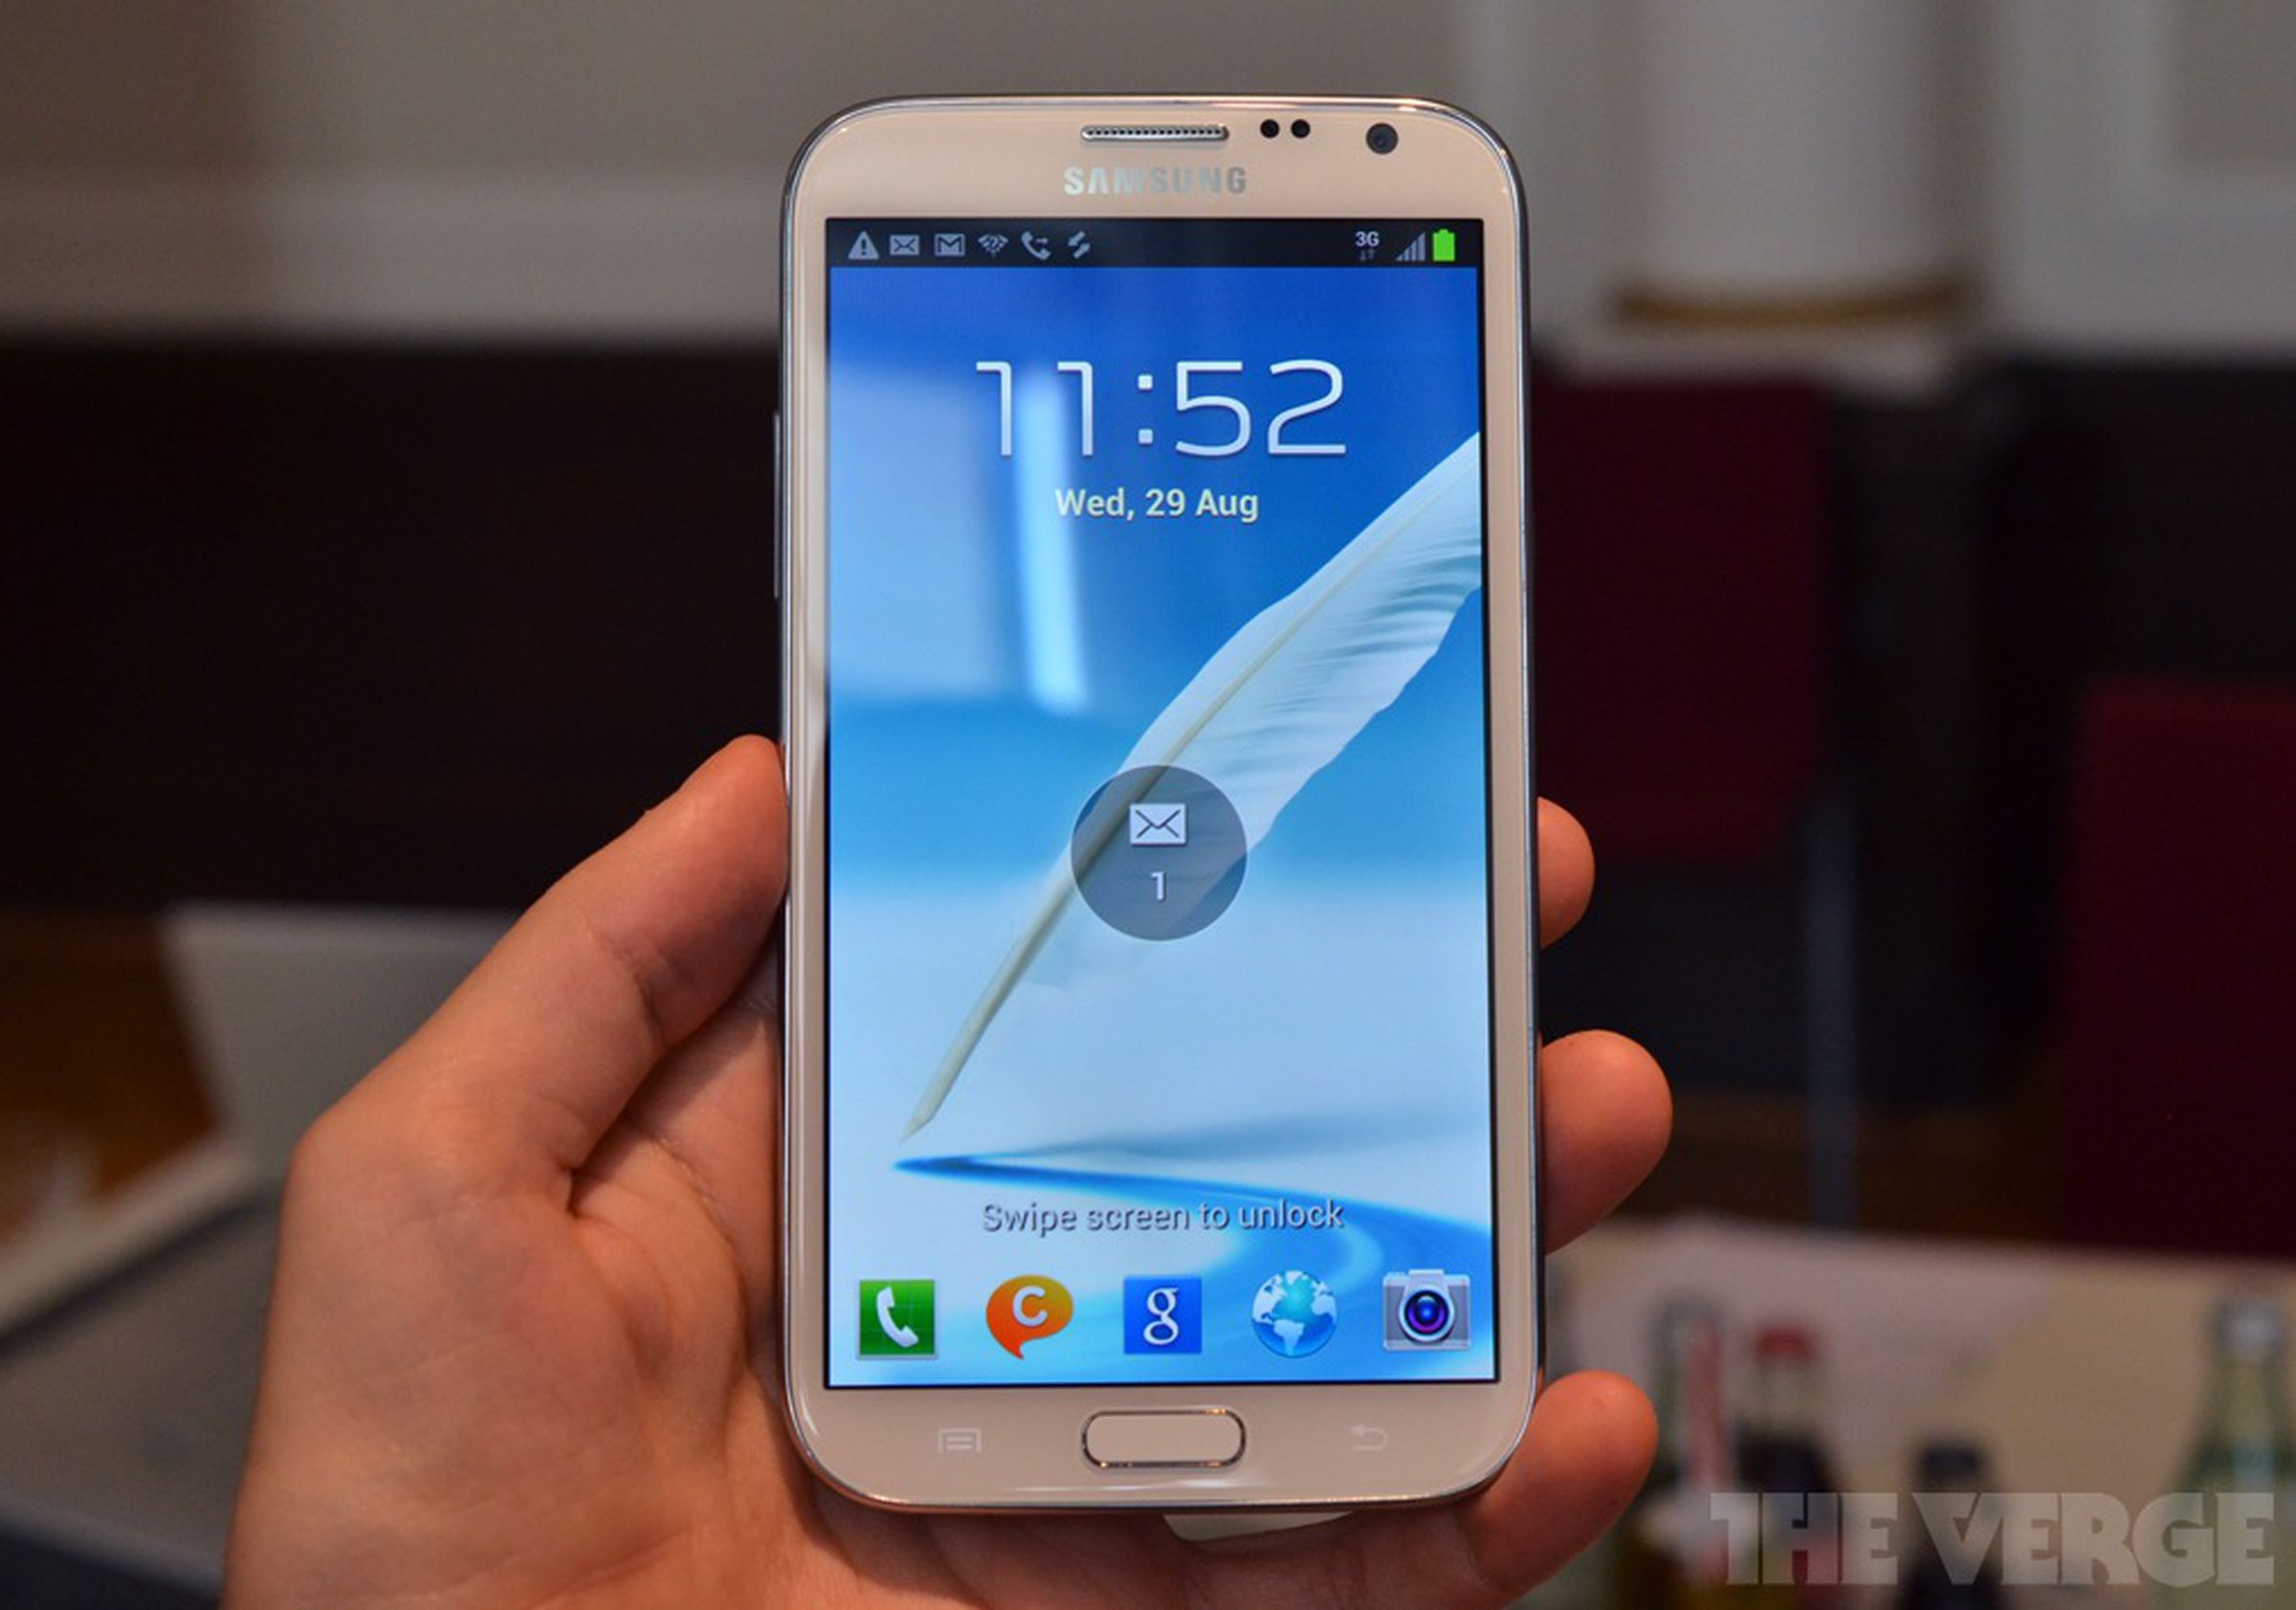 Samsung Galaxy Note II hands-on photos